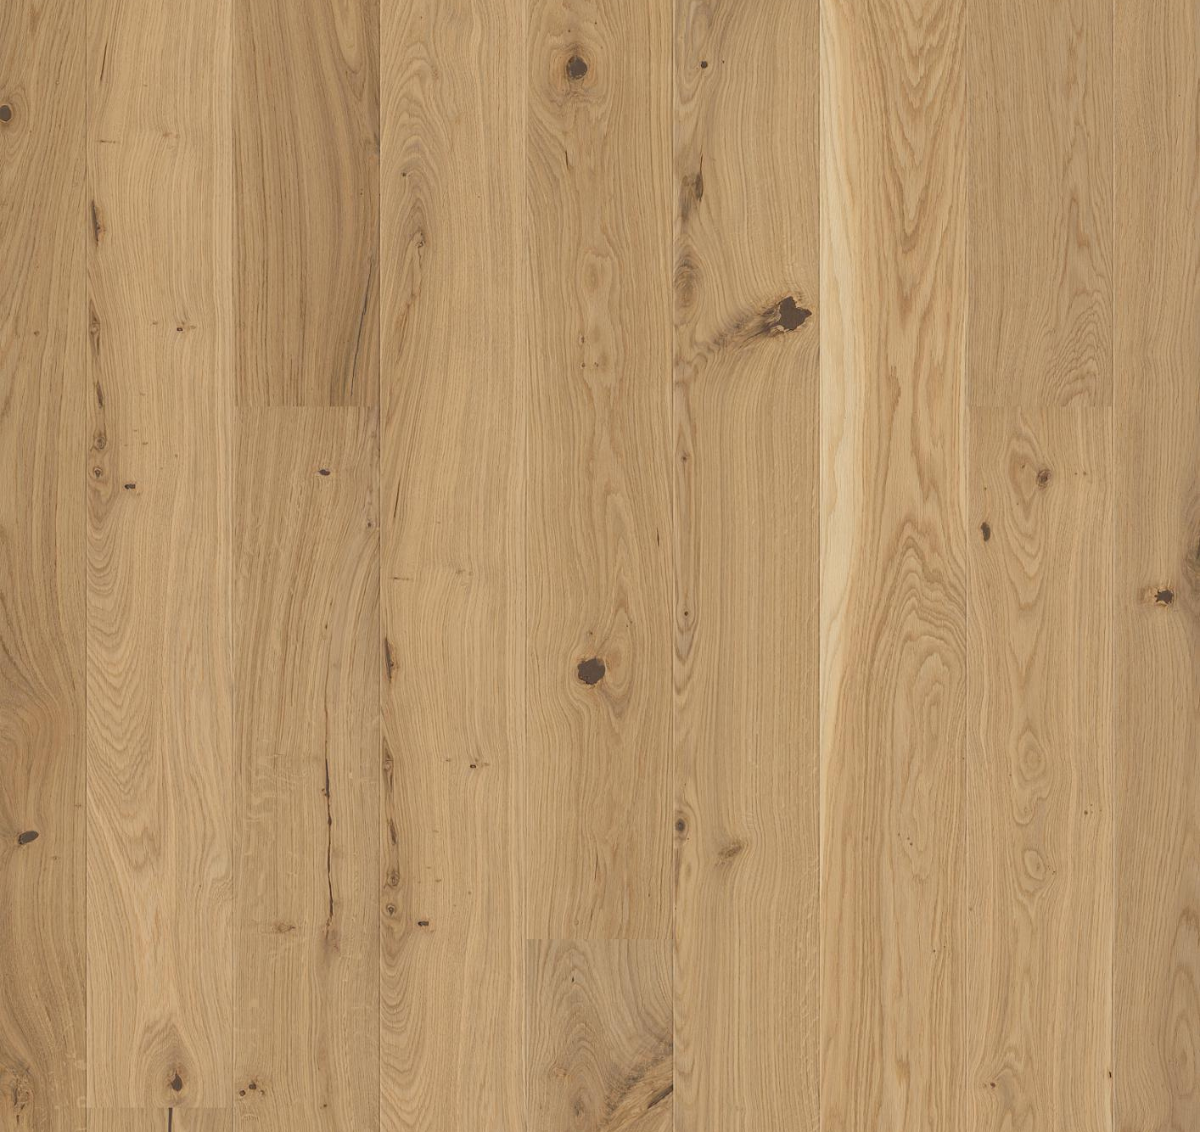 European white oak flooring in a natural tone